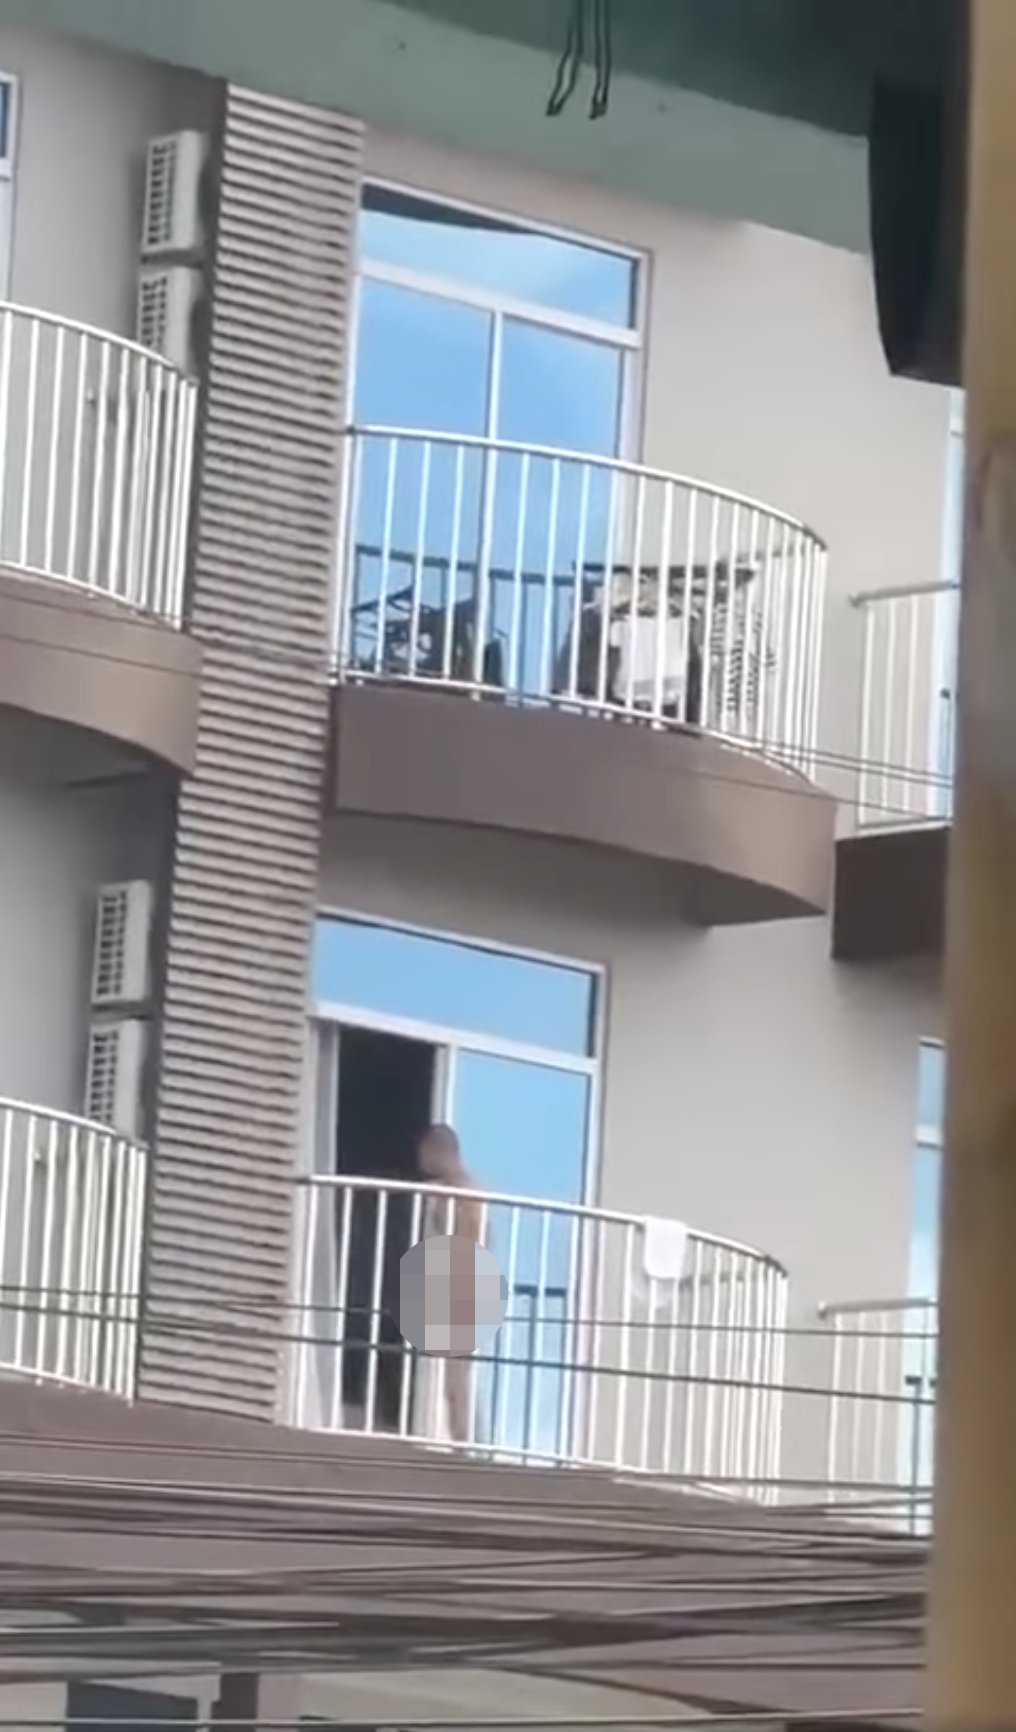 Tourist seen walking naked at sabah hotel balcony, nabbed by police | weirdkaya